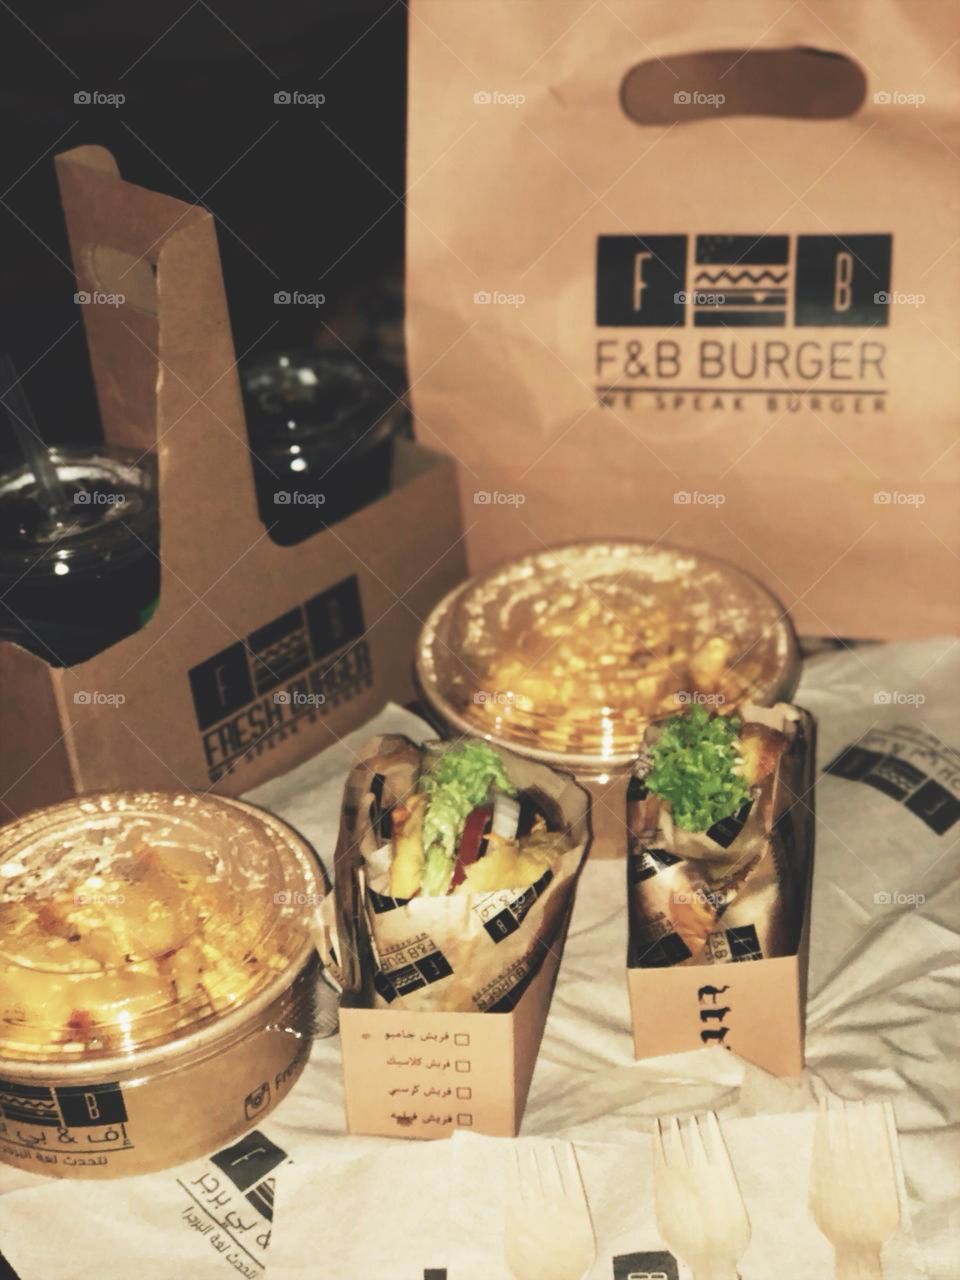 F&B burger